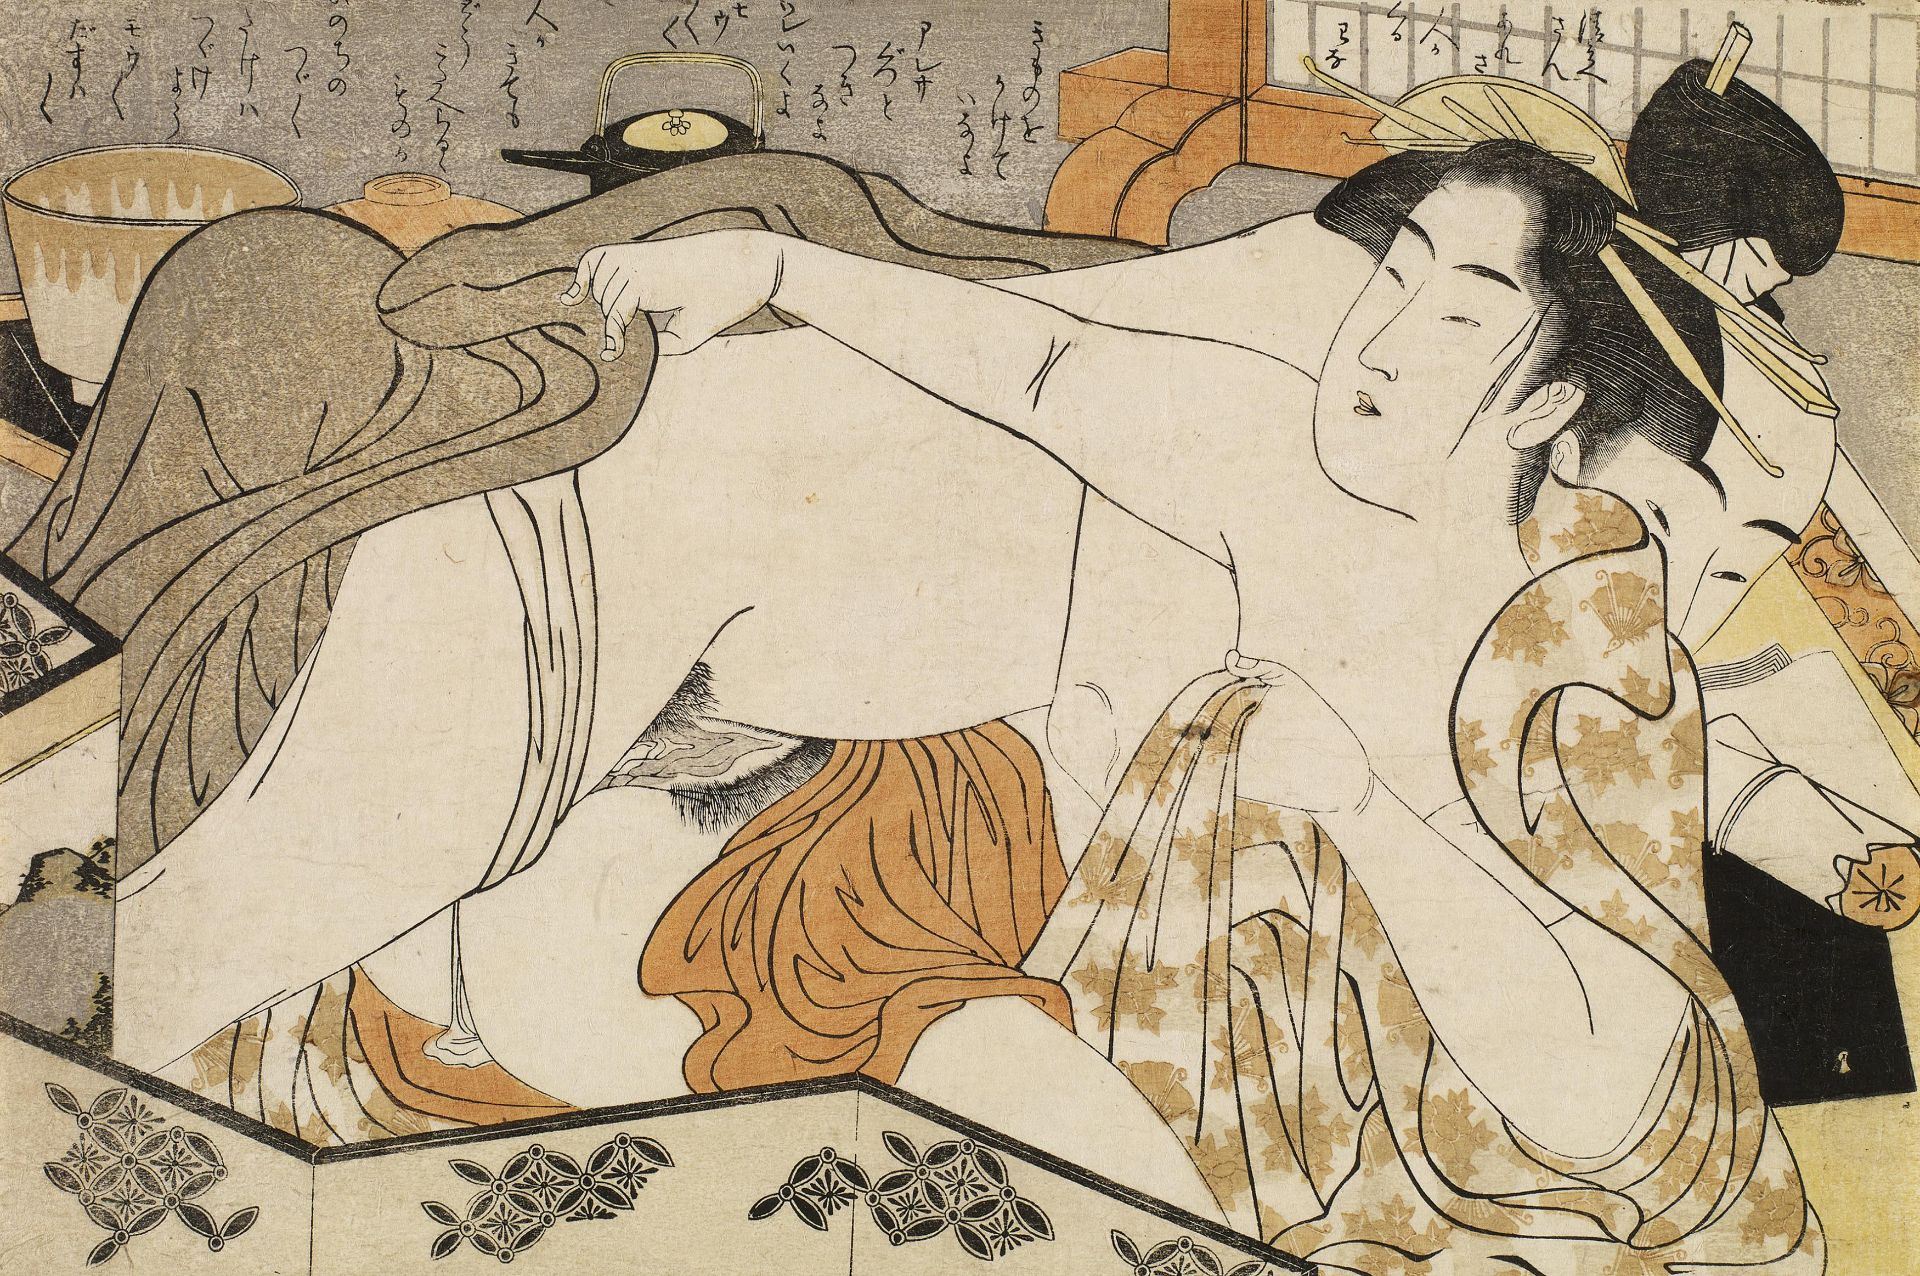 13 Blätter der Shunga-Serie "Fumi no kiyogaki" - Image 17 of 27